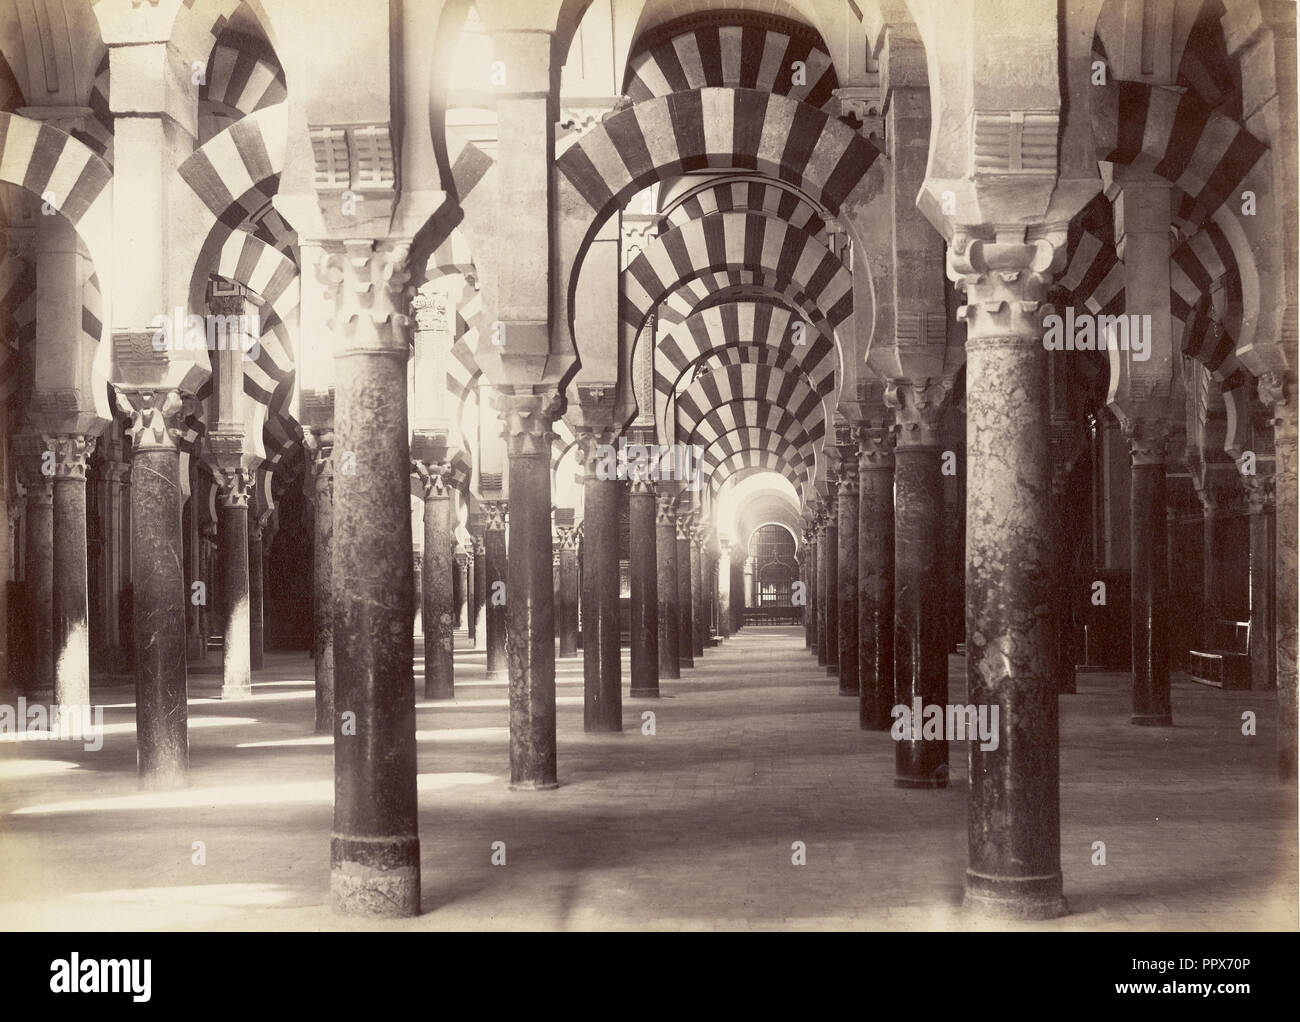 Vista interior de la Mezquita o Catedral, Cordoba; Juan Laurent, Französisch, 1816 - 1892, Cordoba, Spanien; 1875; Eiklar silber Stockfoto